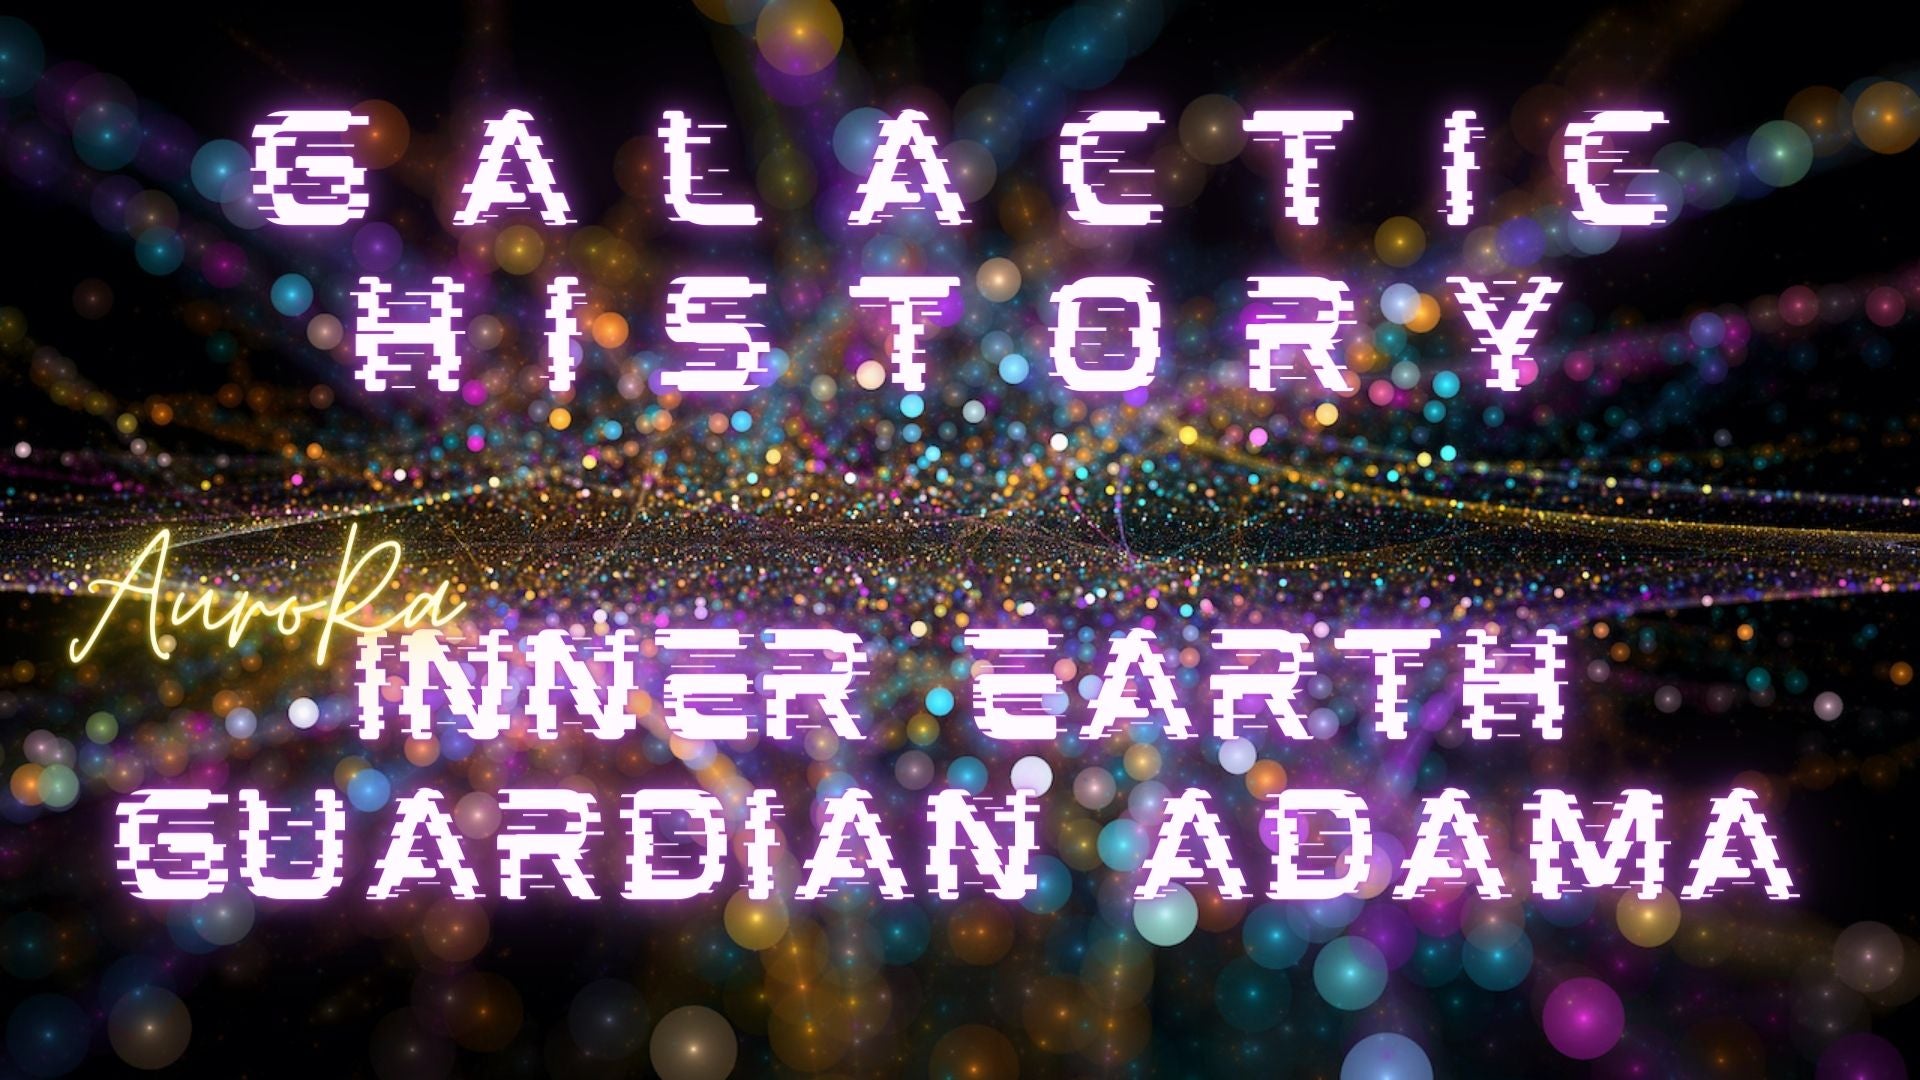 Inner Earth Galactic Guardian Adama